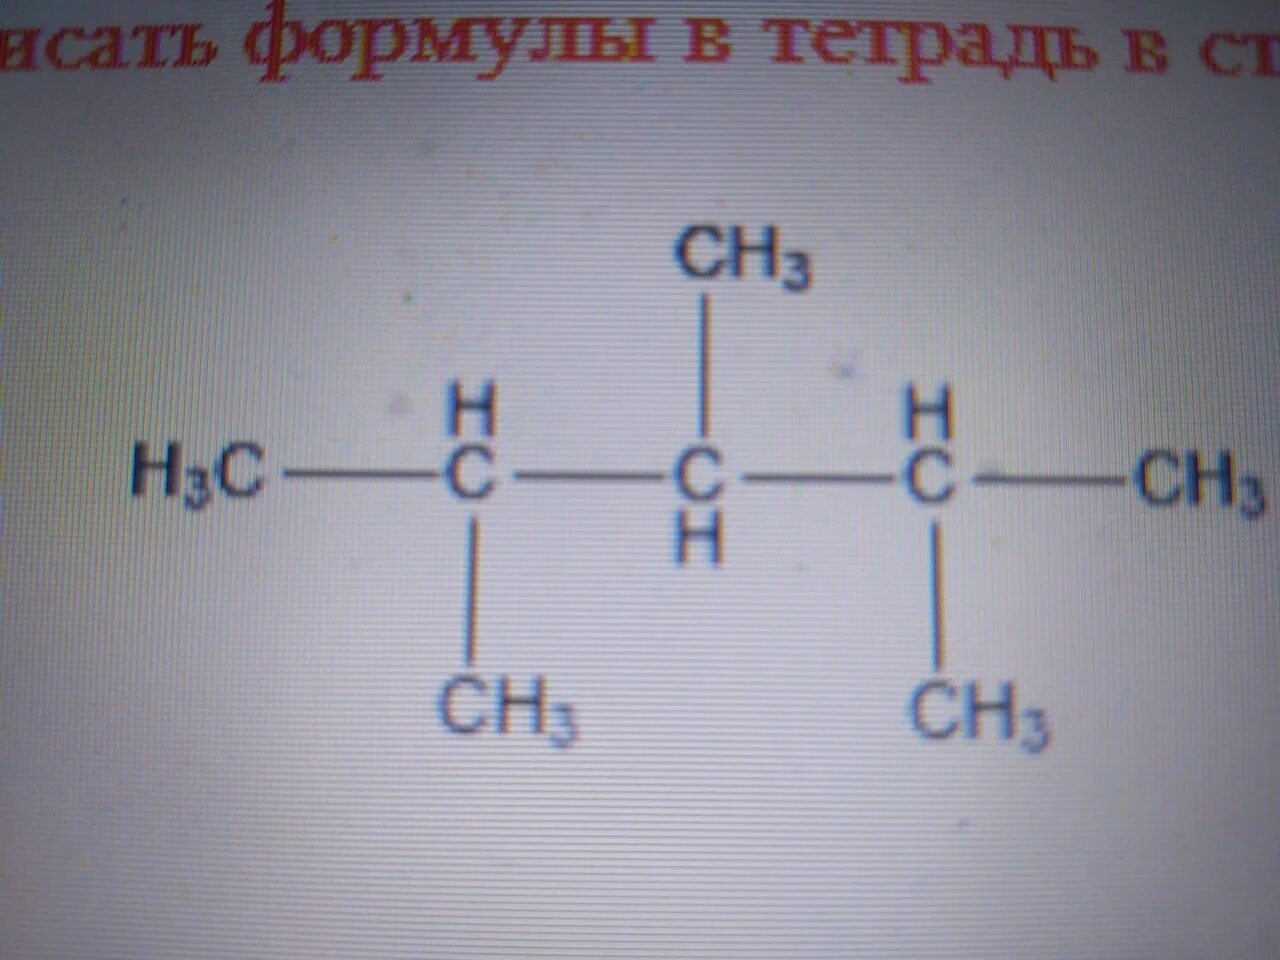 Дайте название соединению ch3 ch ch c. H3c Ch c Ch ch3. H3c-Ch-Ch-c---Ch. H3c Ch-Ch(ch3)-ch3 с. Структурная формула h3c-ch3.